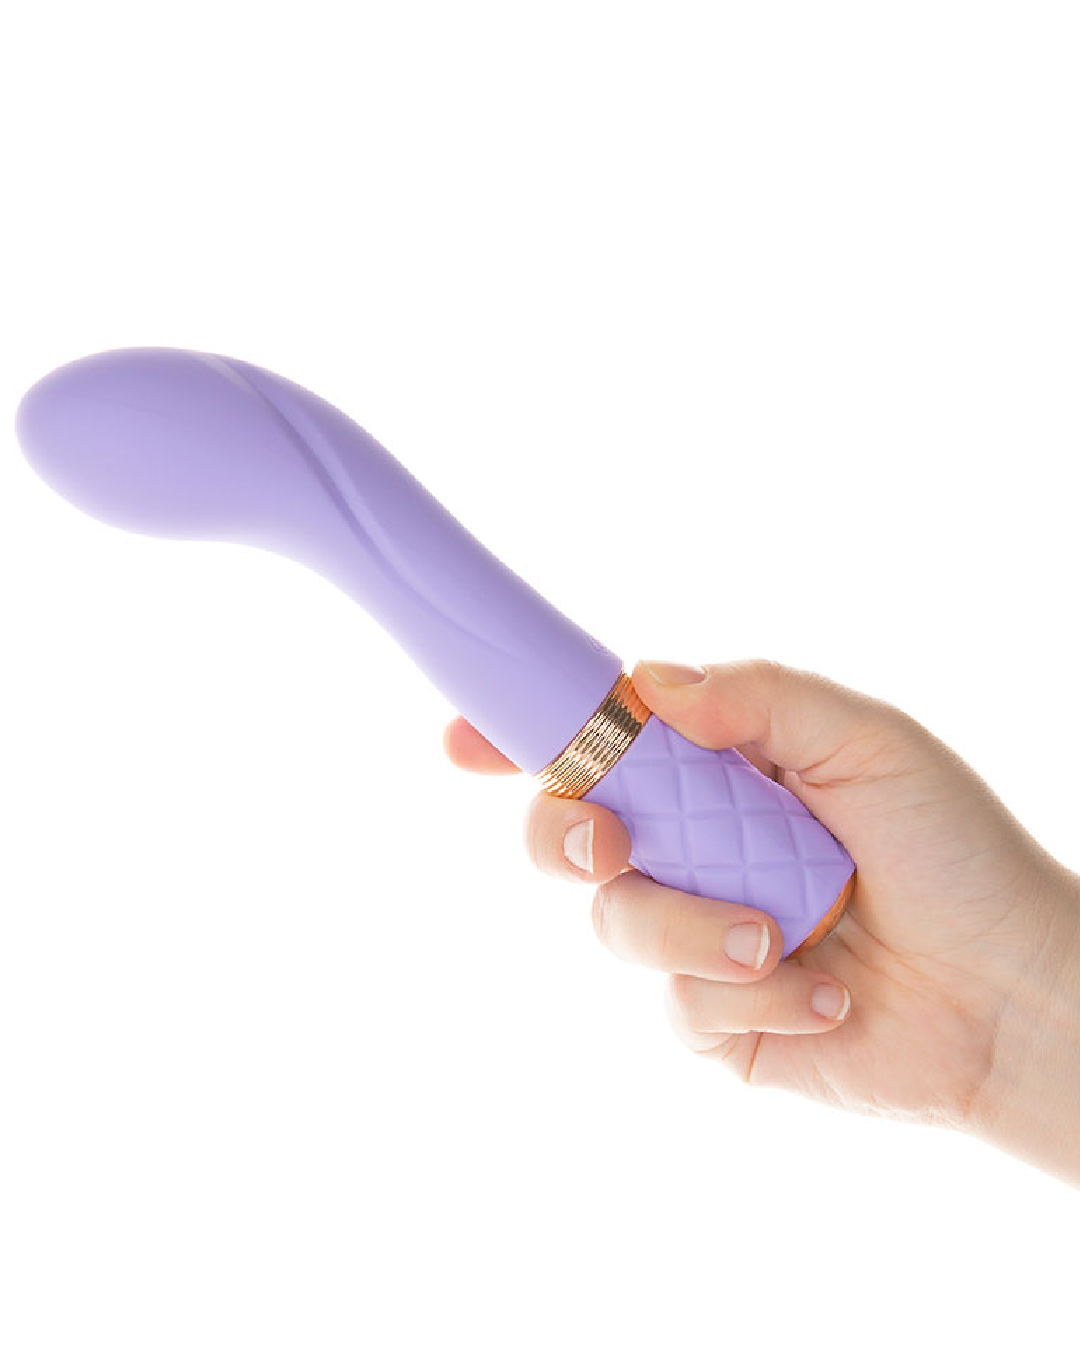 Pillow Talk Sassy G-spot Vibrator - Purple in model's hand 